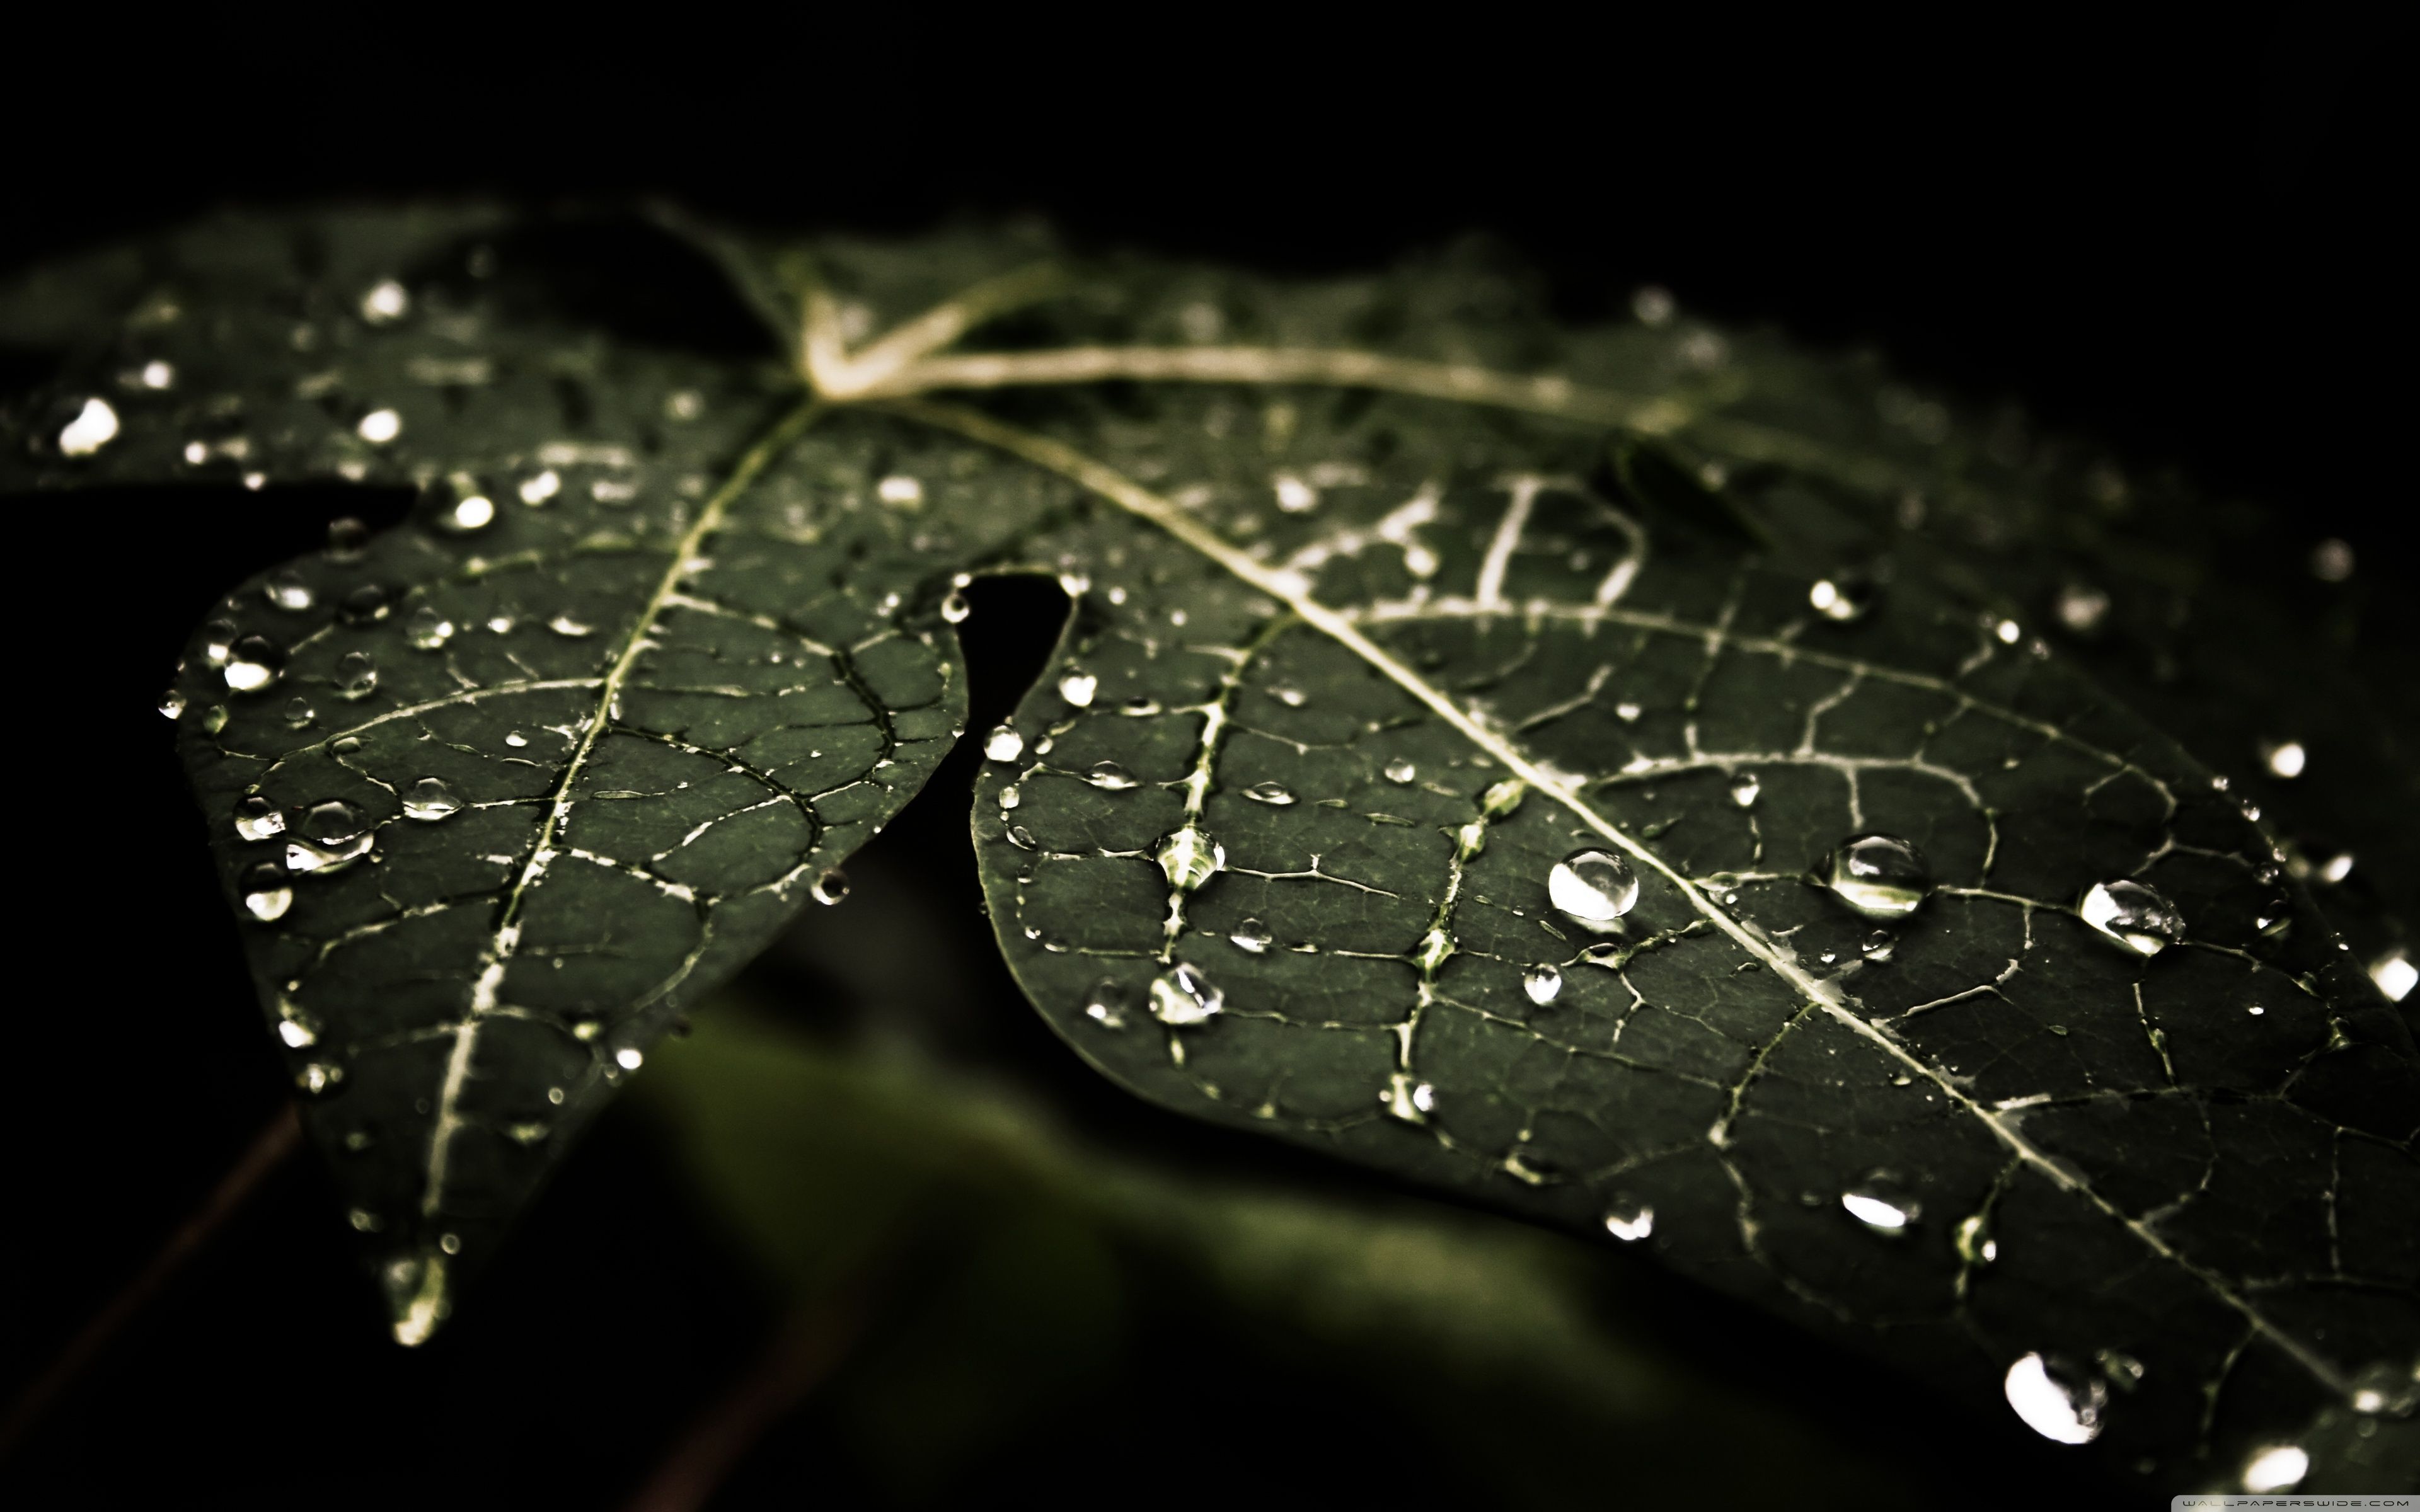 Leafy droplets-wallpaper-3840x2400 wallpaper | 3840x2400 | 231870 ...